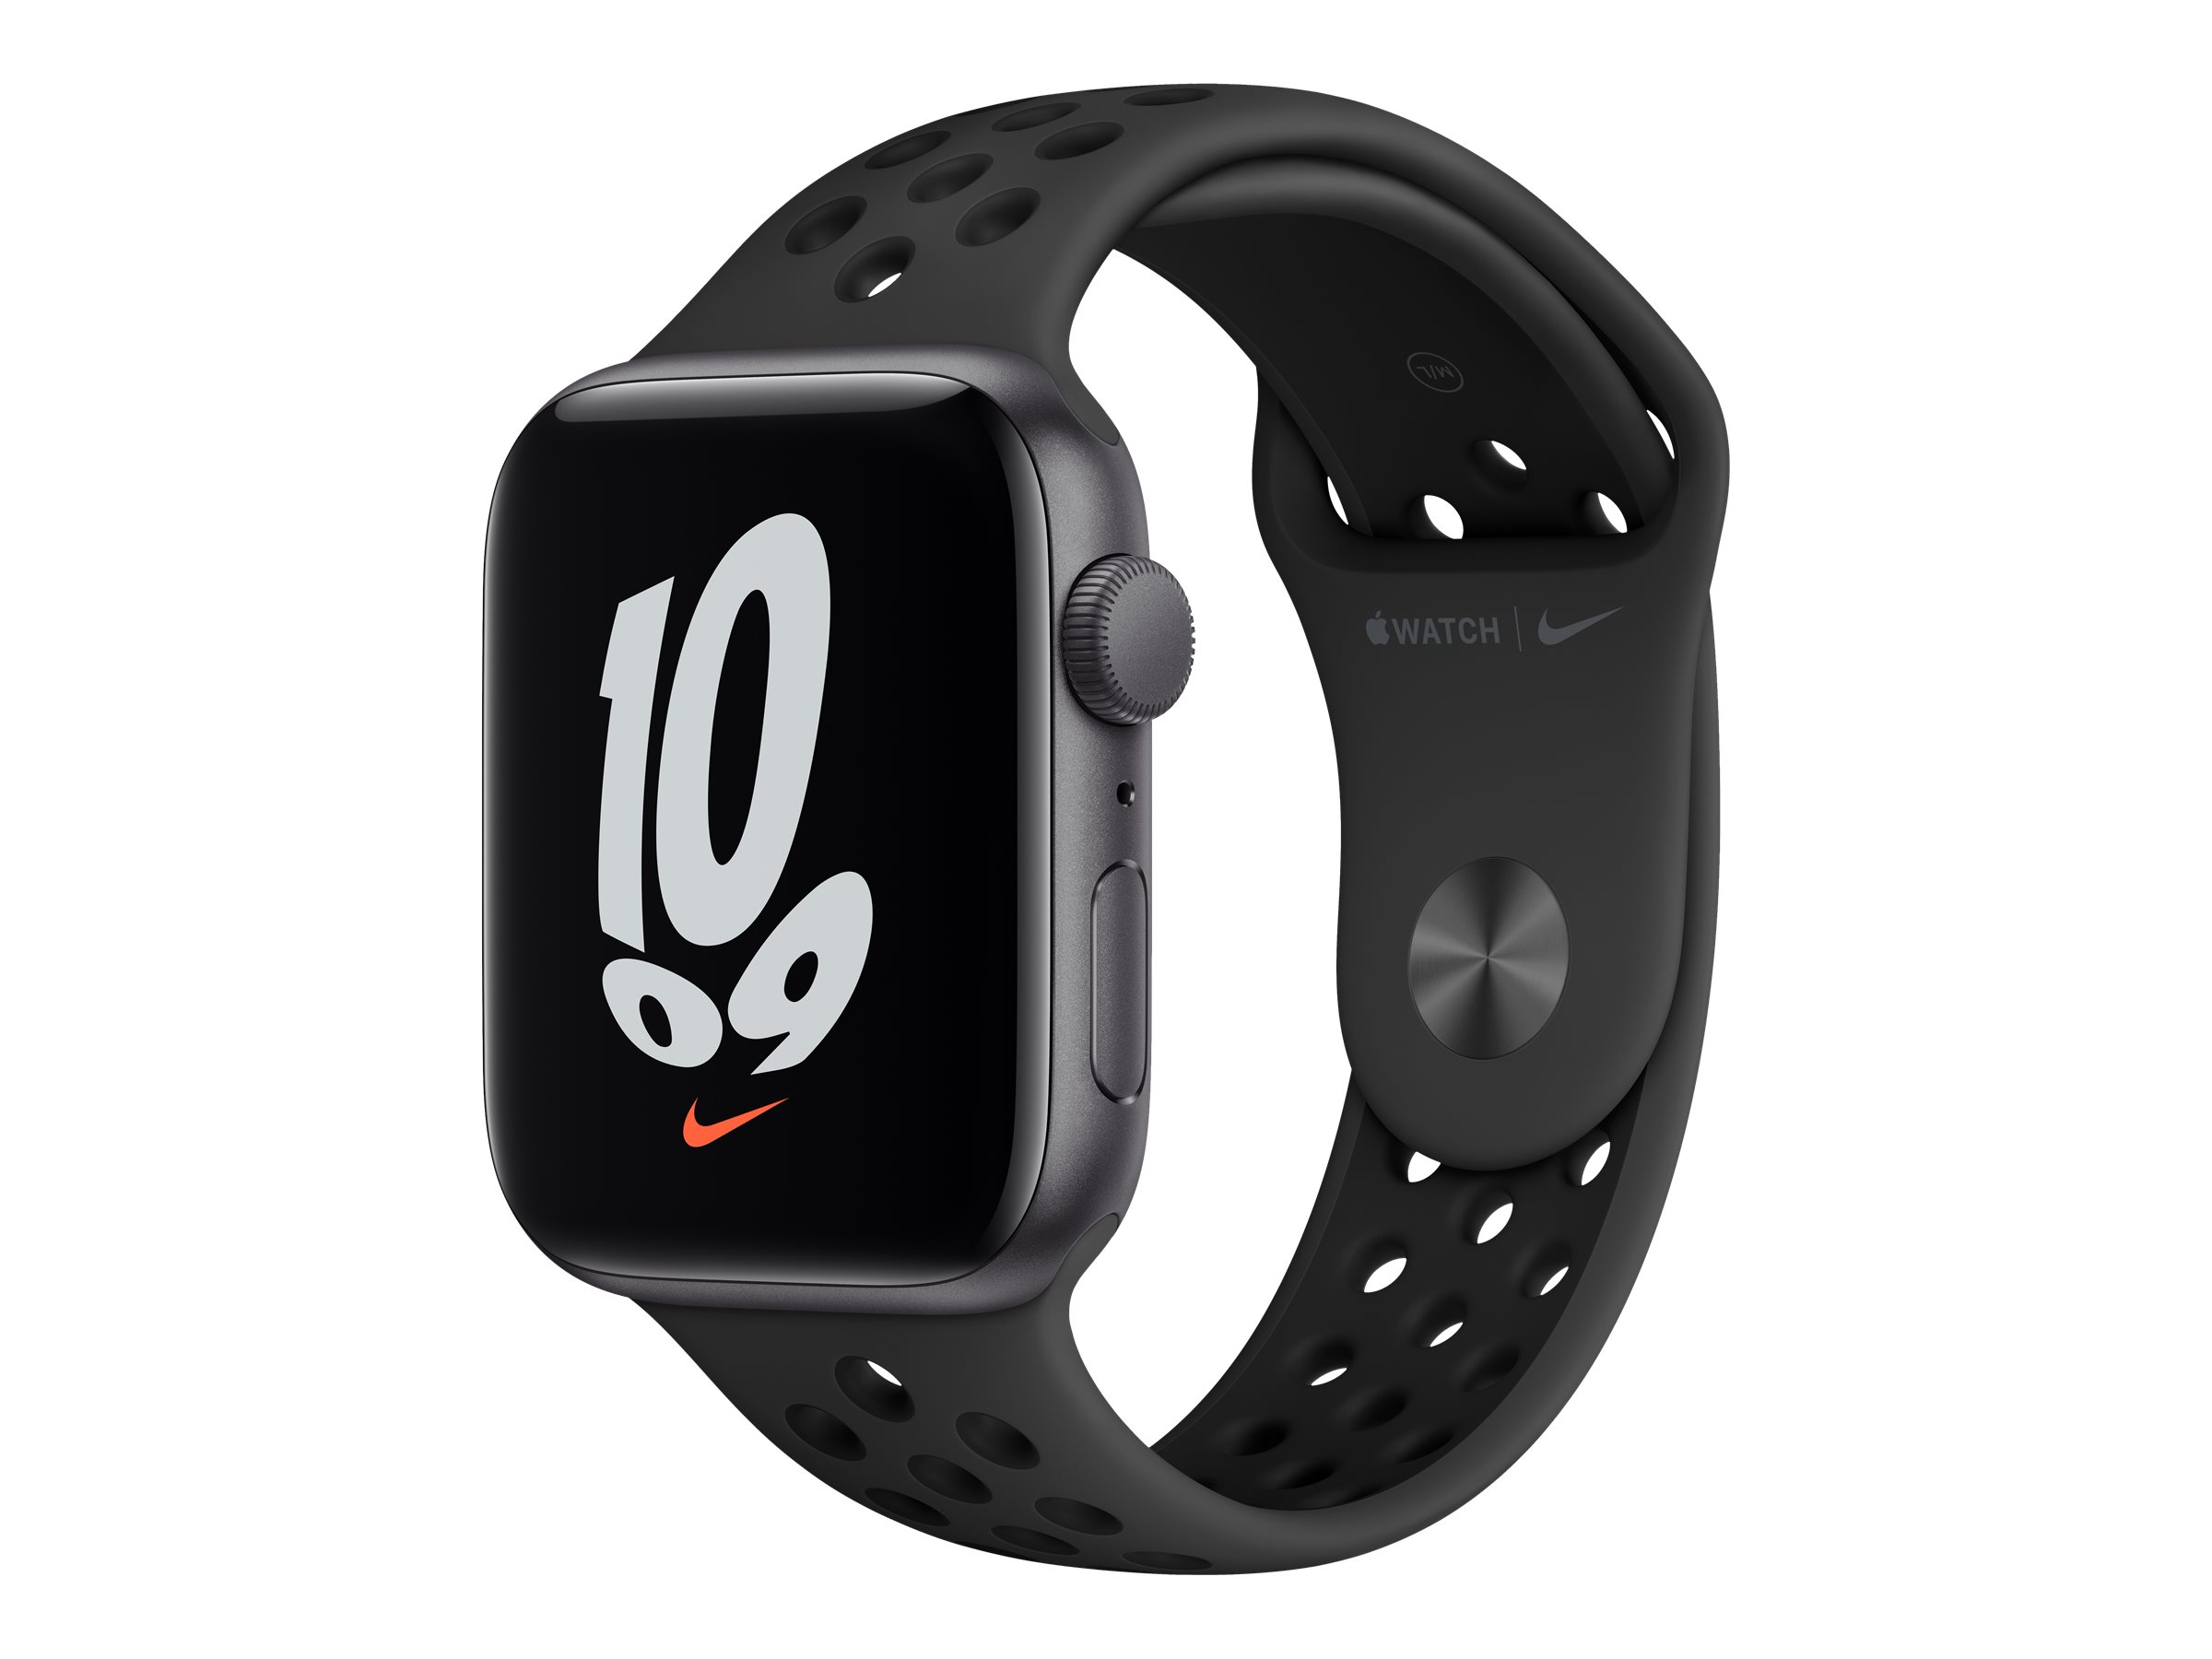 Apple Watch Nike SE (GPS) - 44 mm - Space grau Aluminium